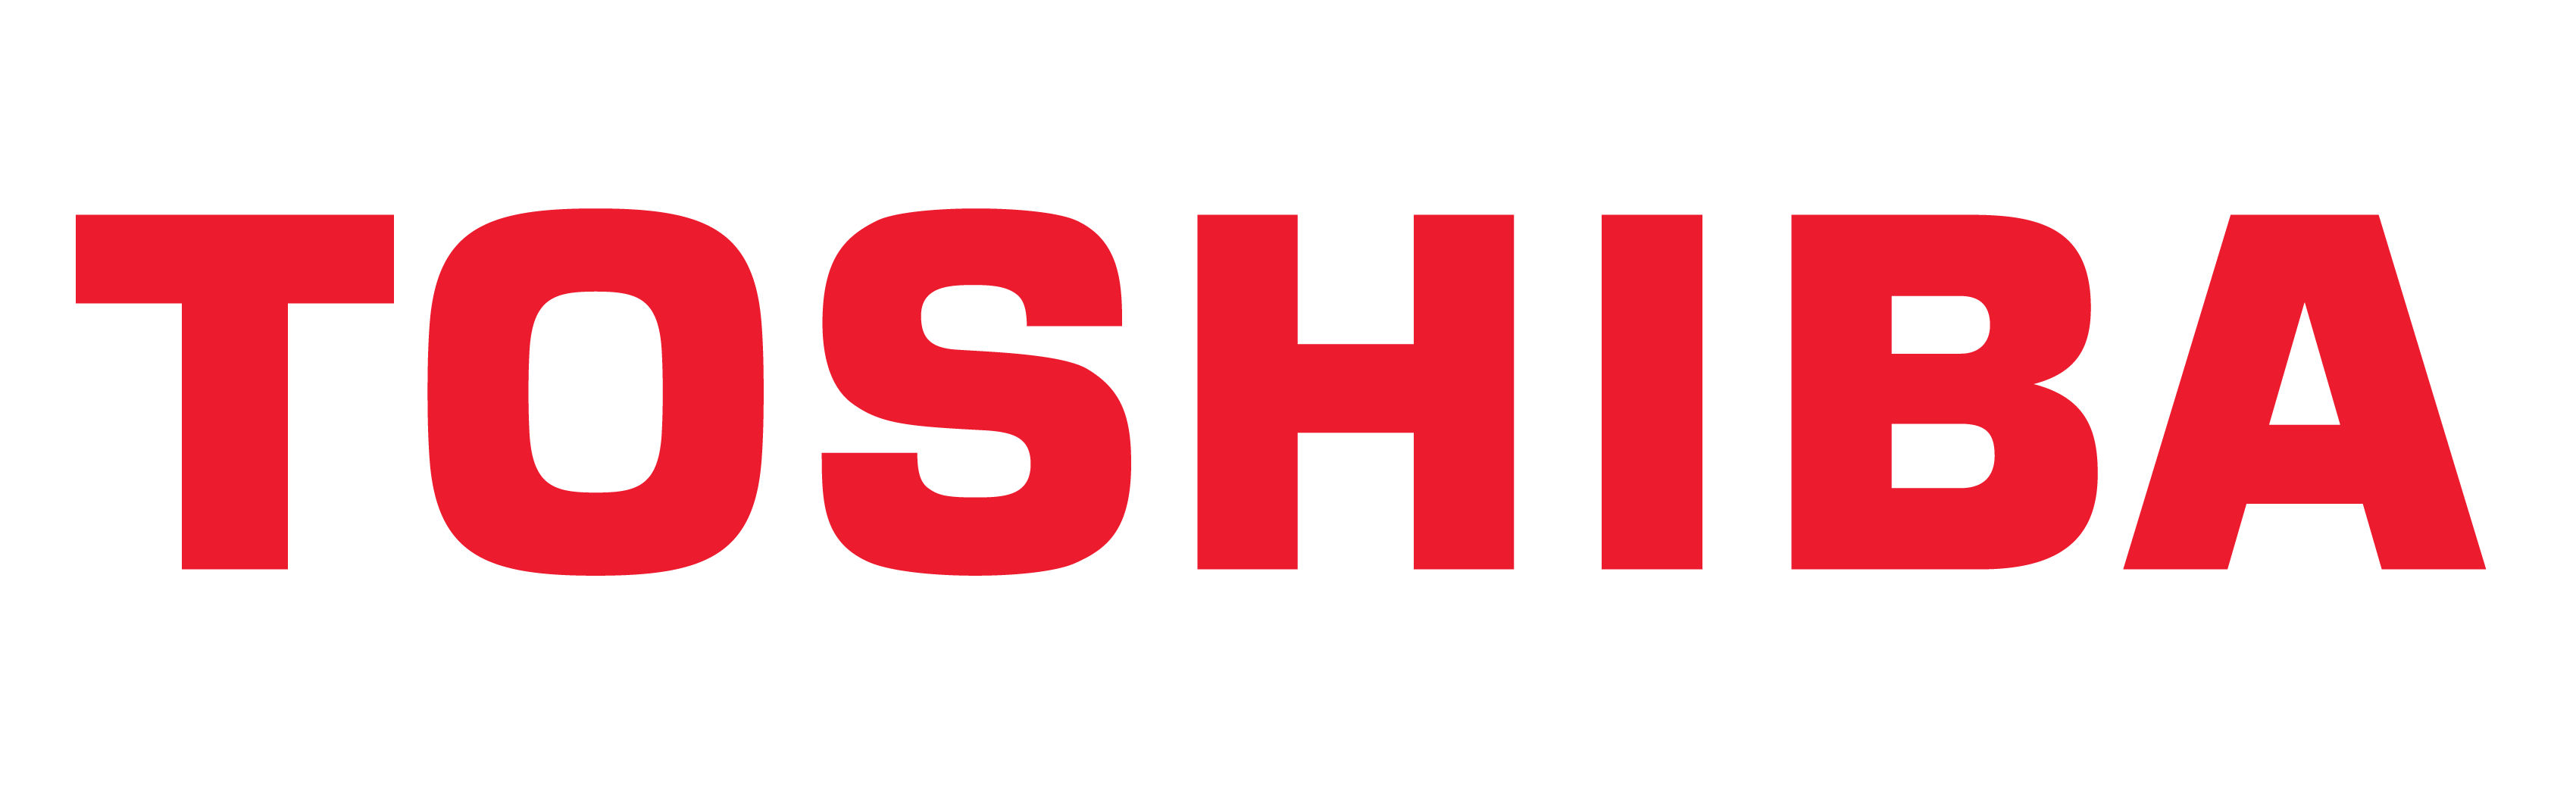 Toshiba Logo, Toshiba Symbol, Meaning, History and Evolution